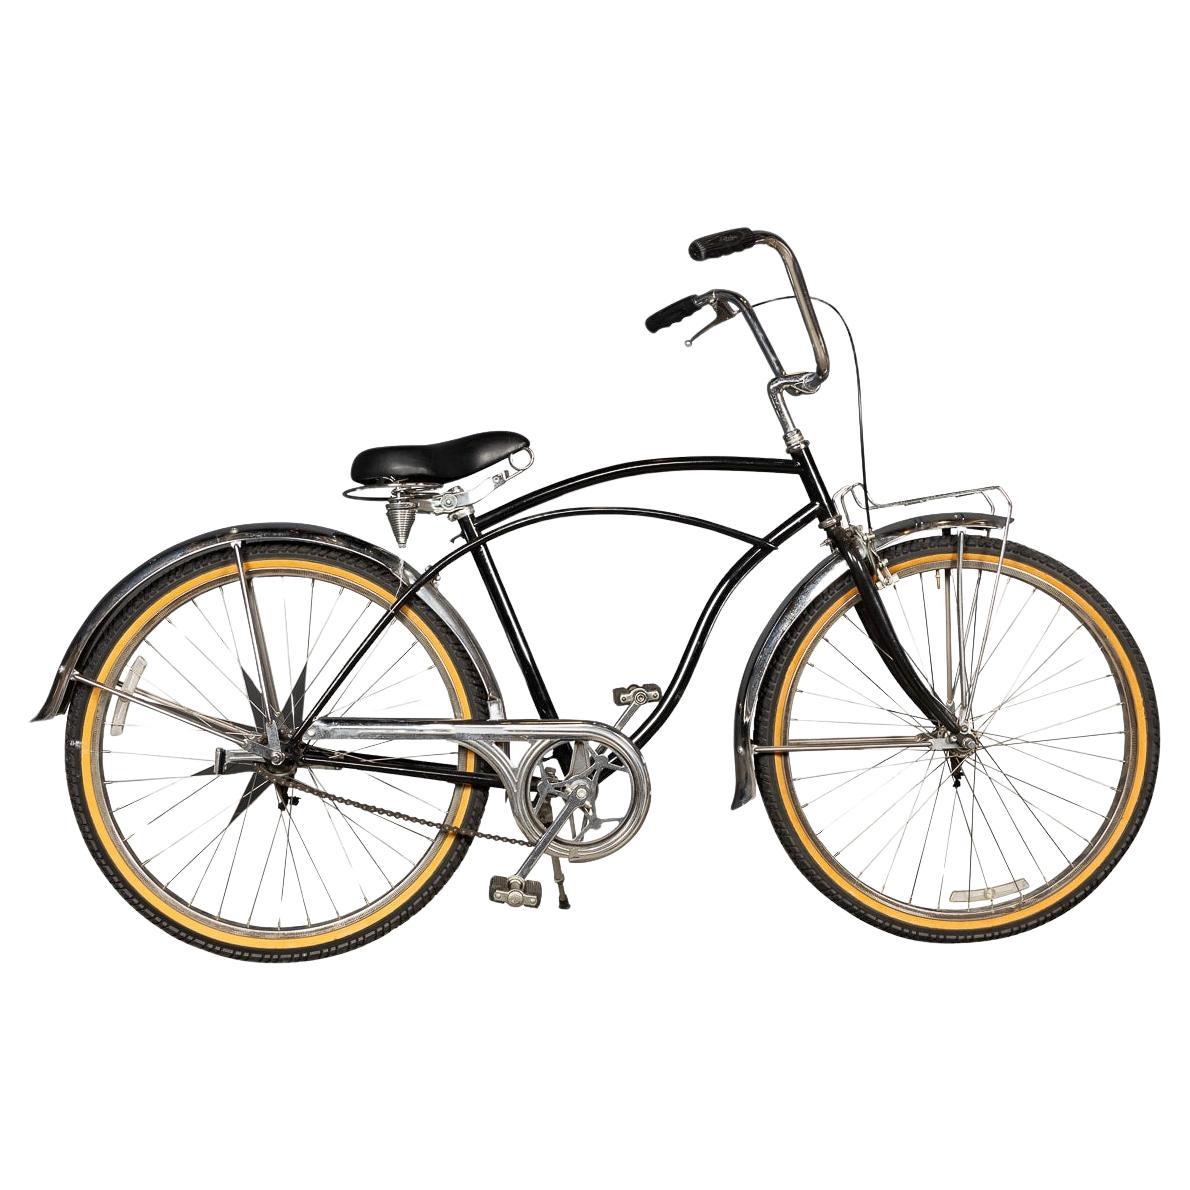 Vintage 20th Century Dutch Fixed Gear Bicycle, Amsterdam c.1950